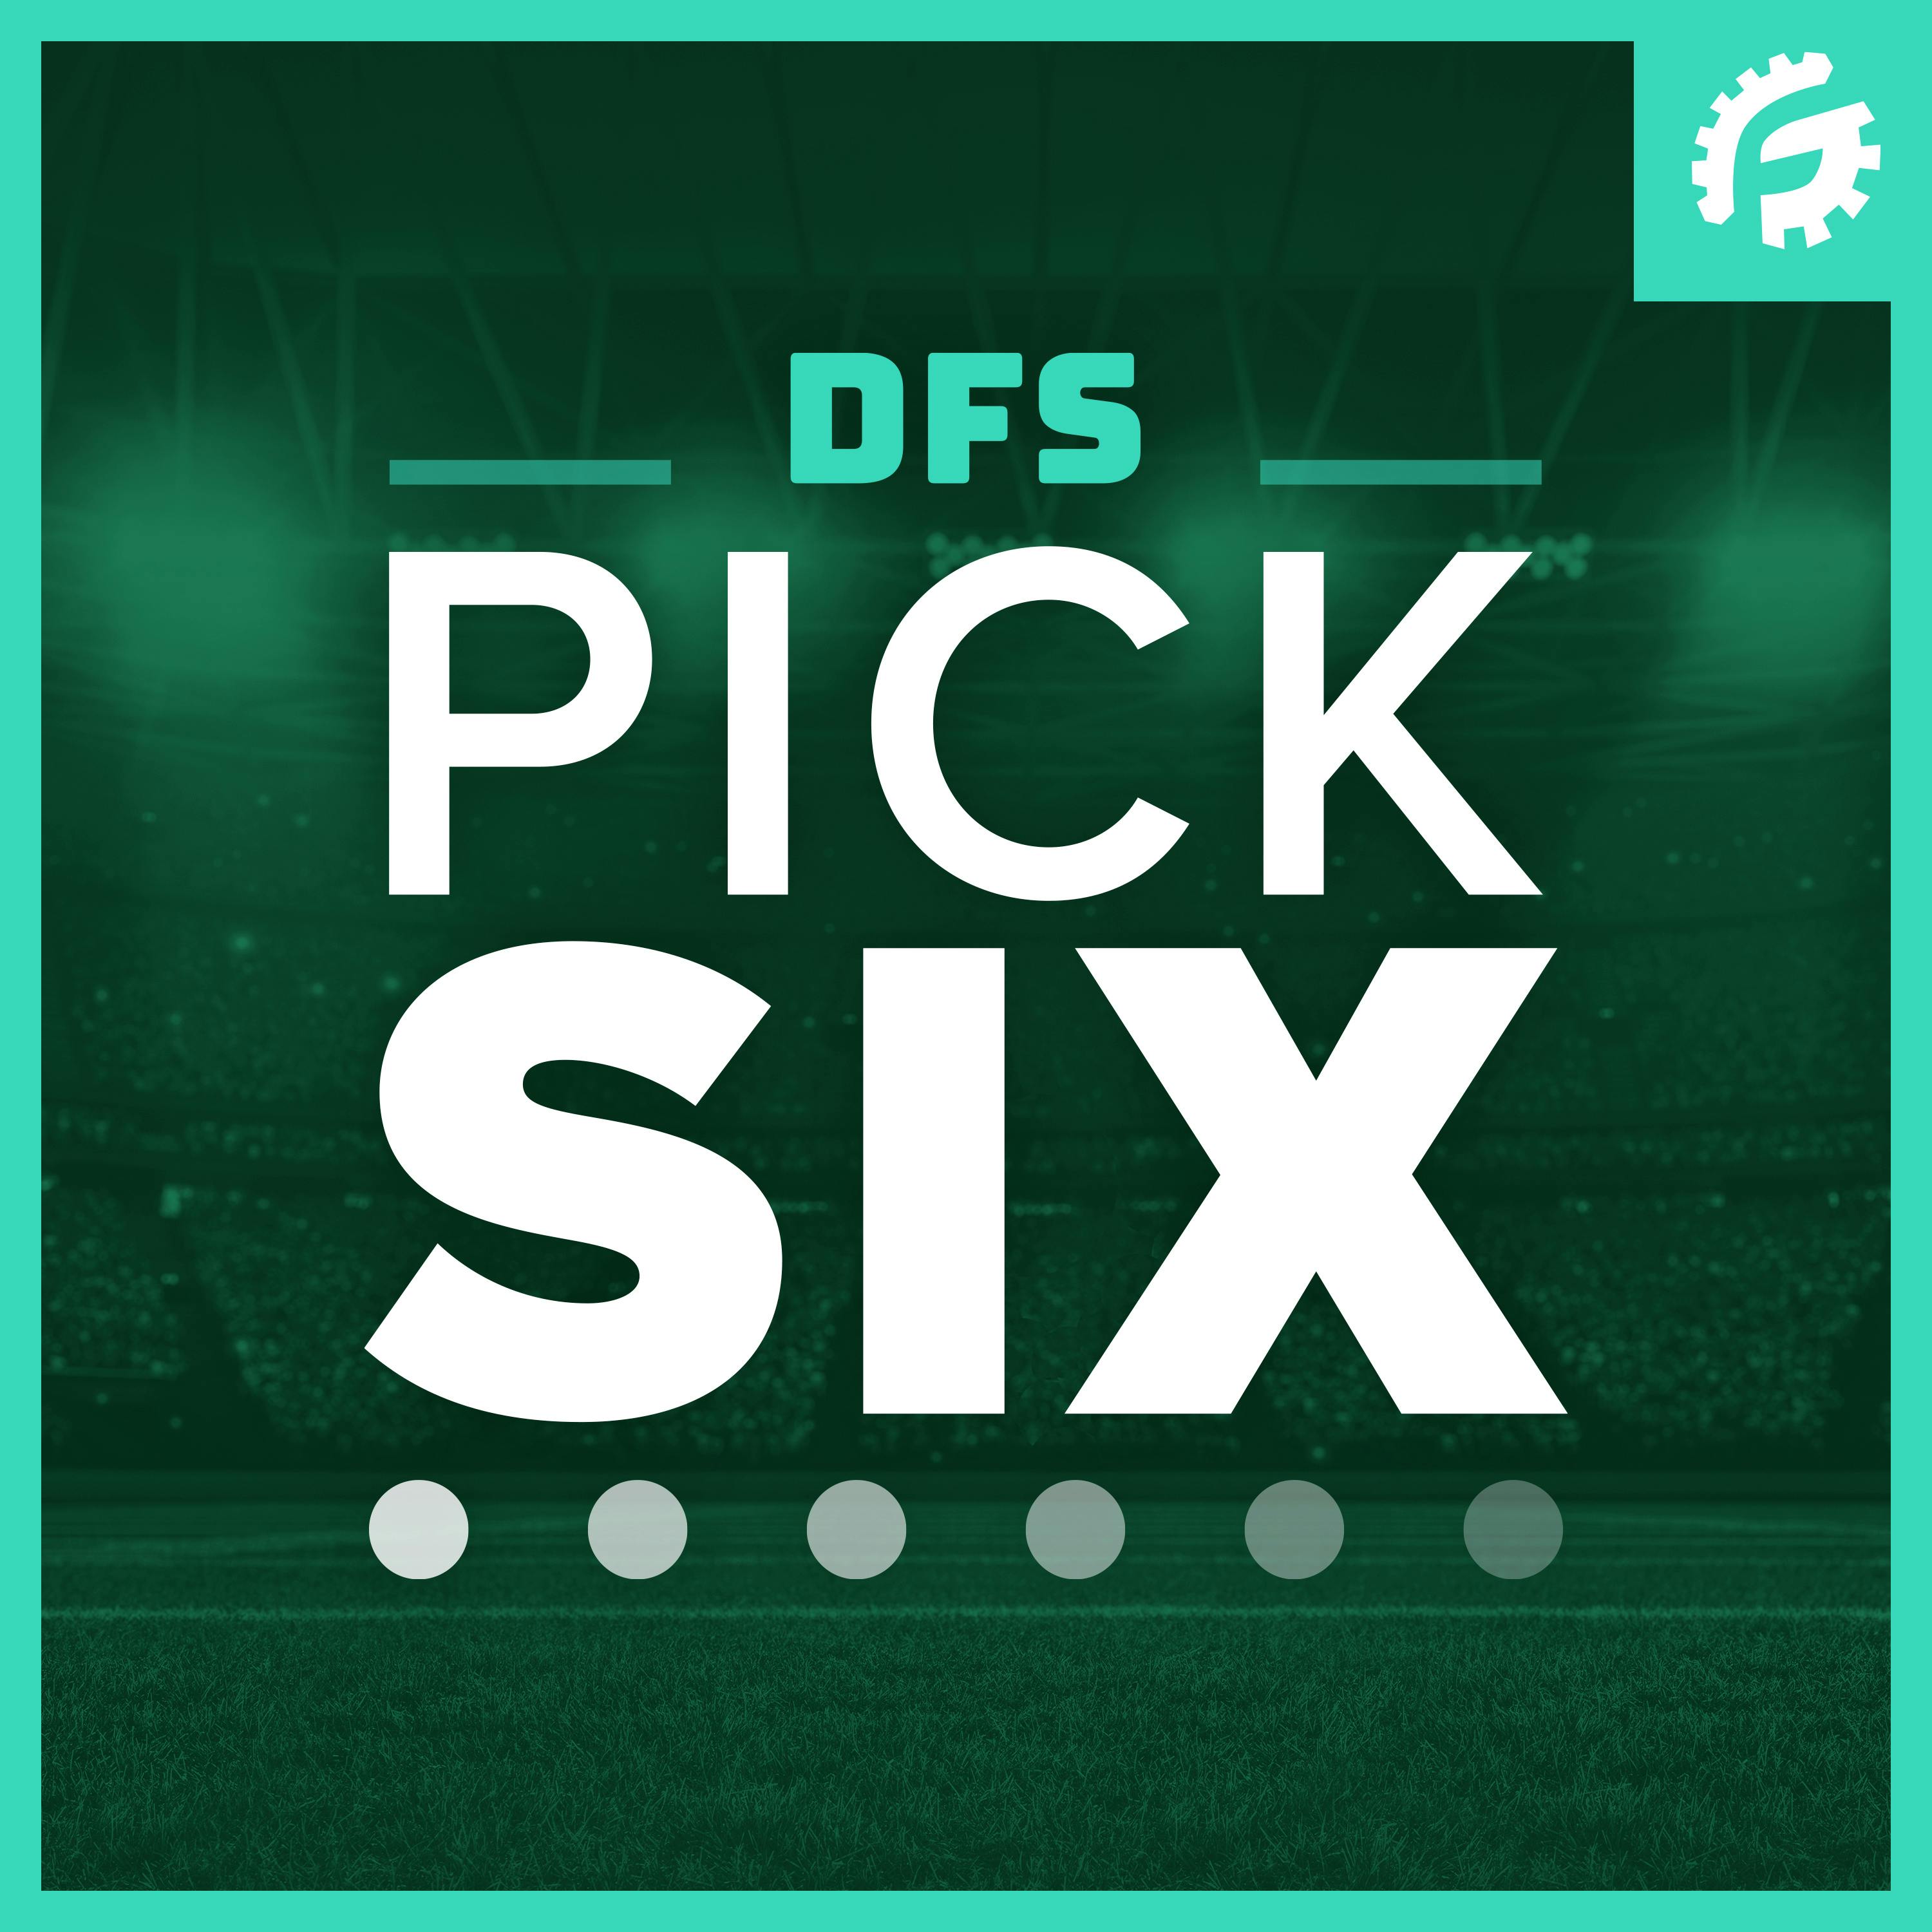 NFL DFS Pick 6 Show - Week 12